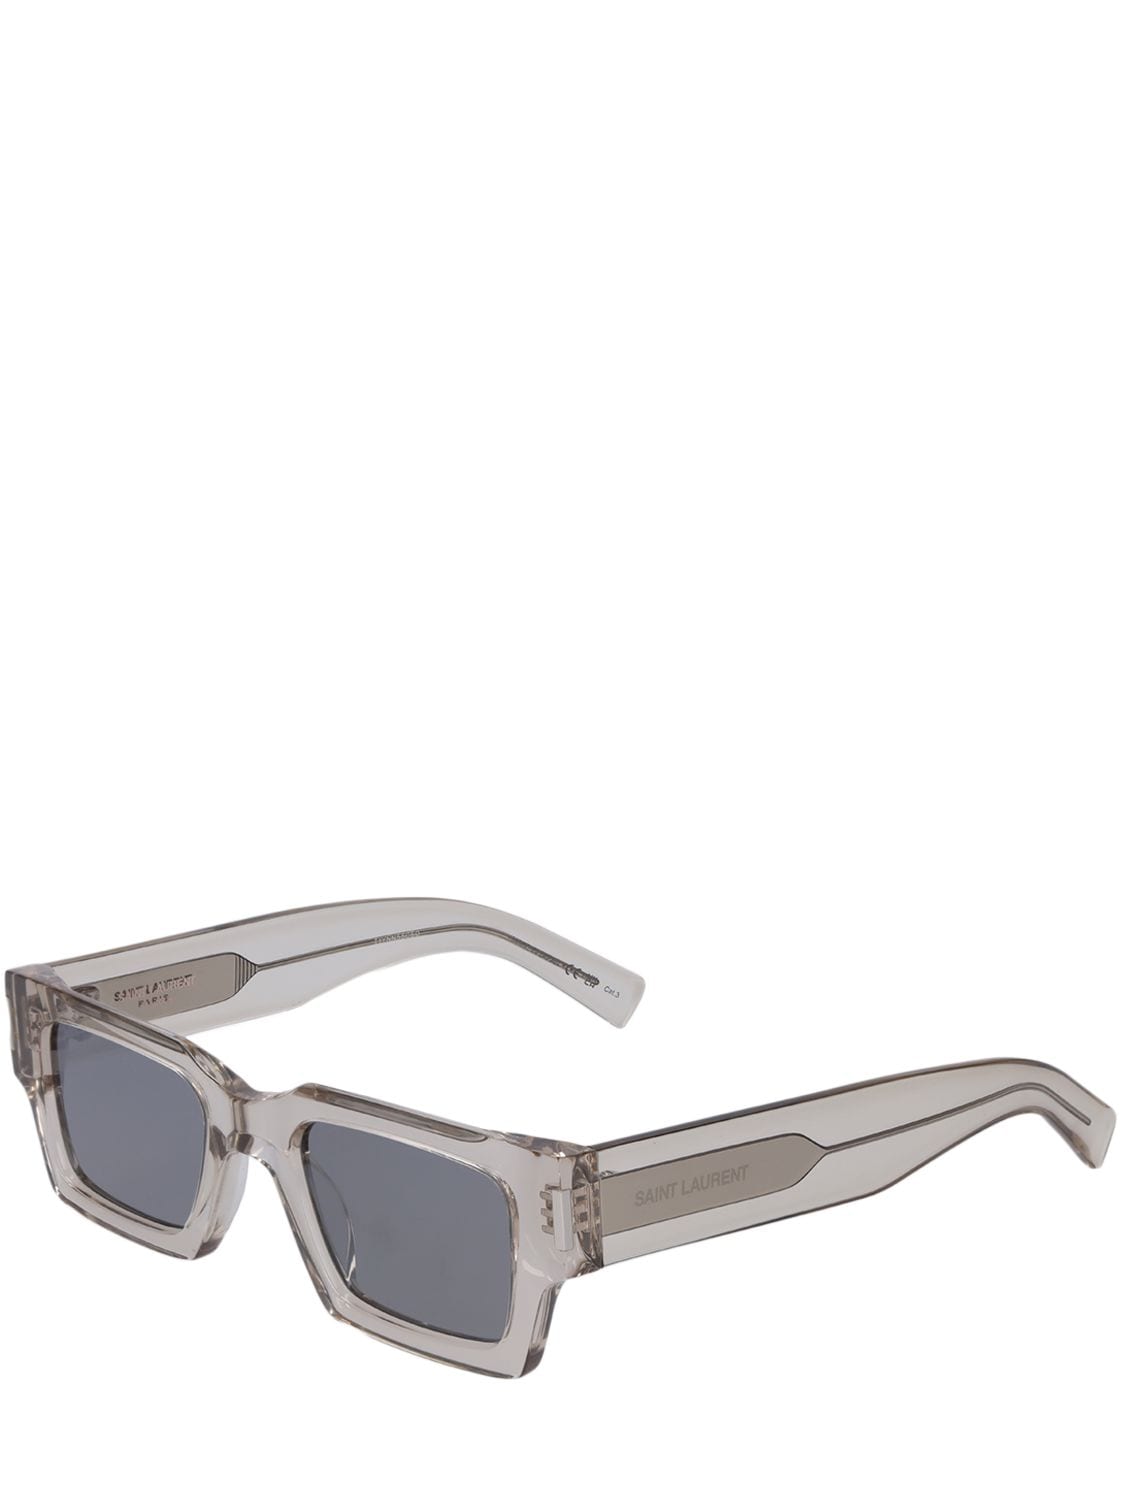 Saint Laurent SL 572 003 sunglasses